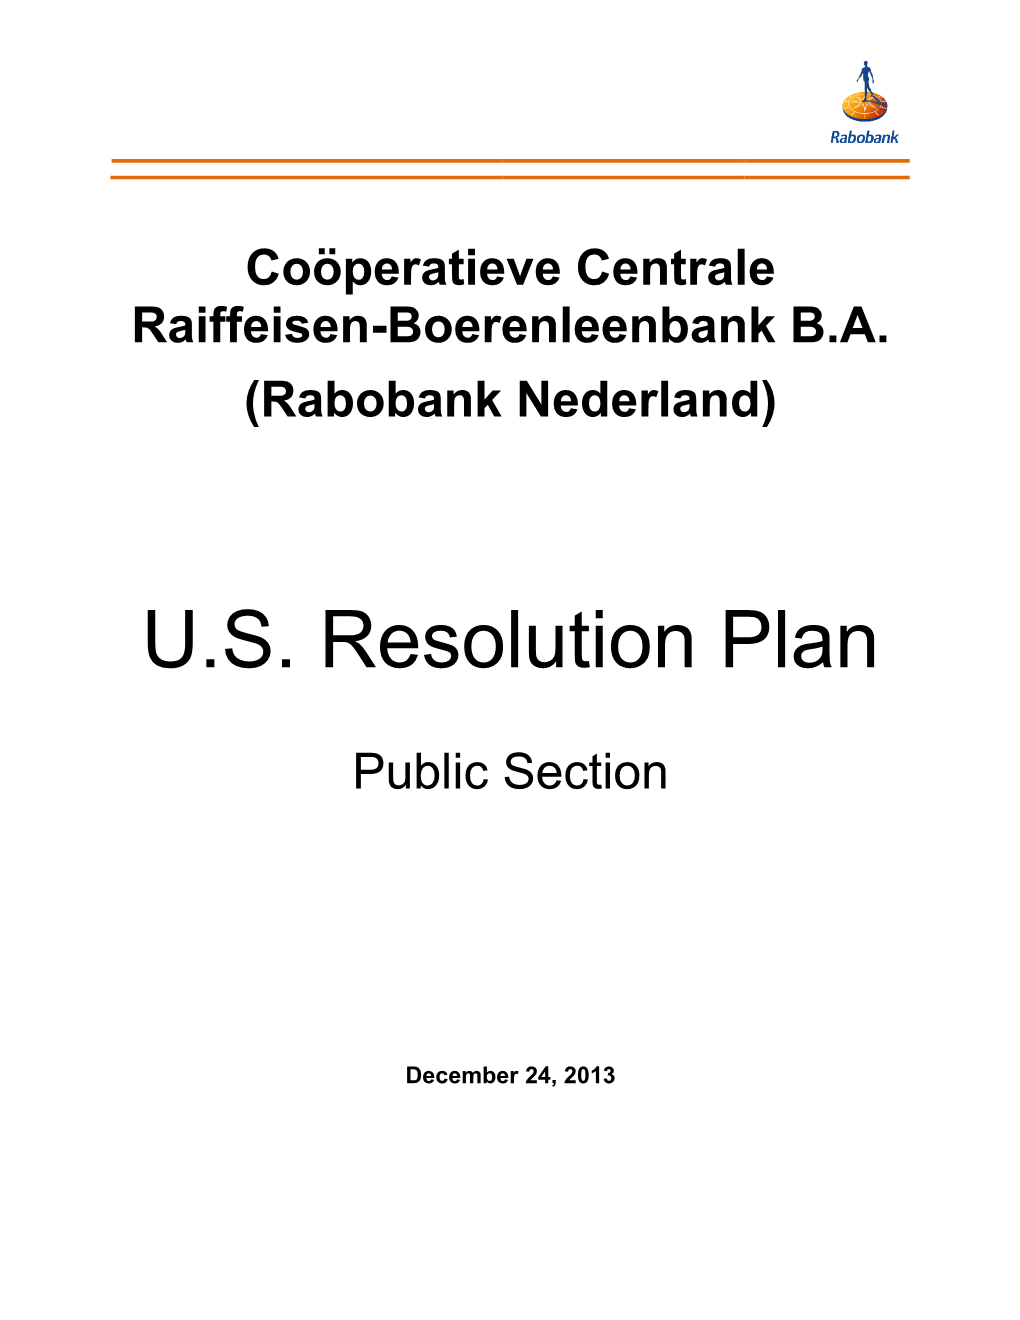 U.S. Resolution Plan